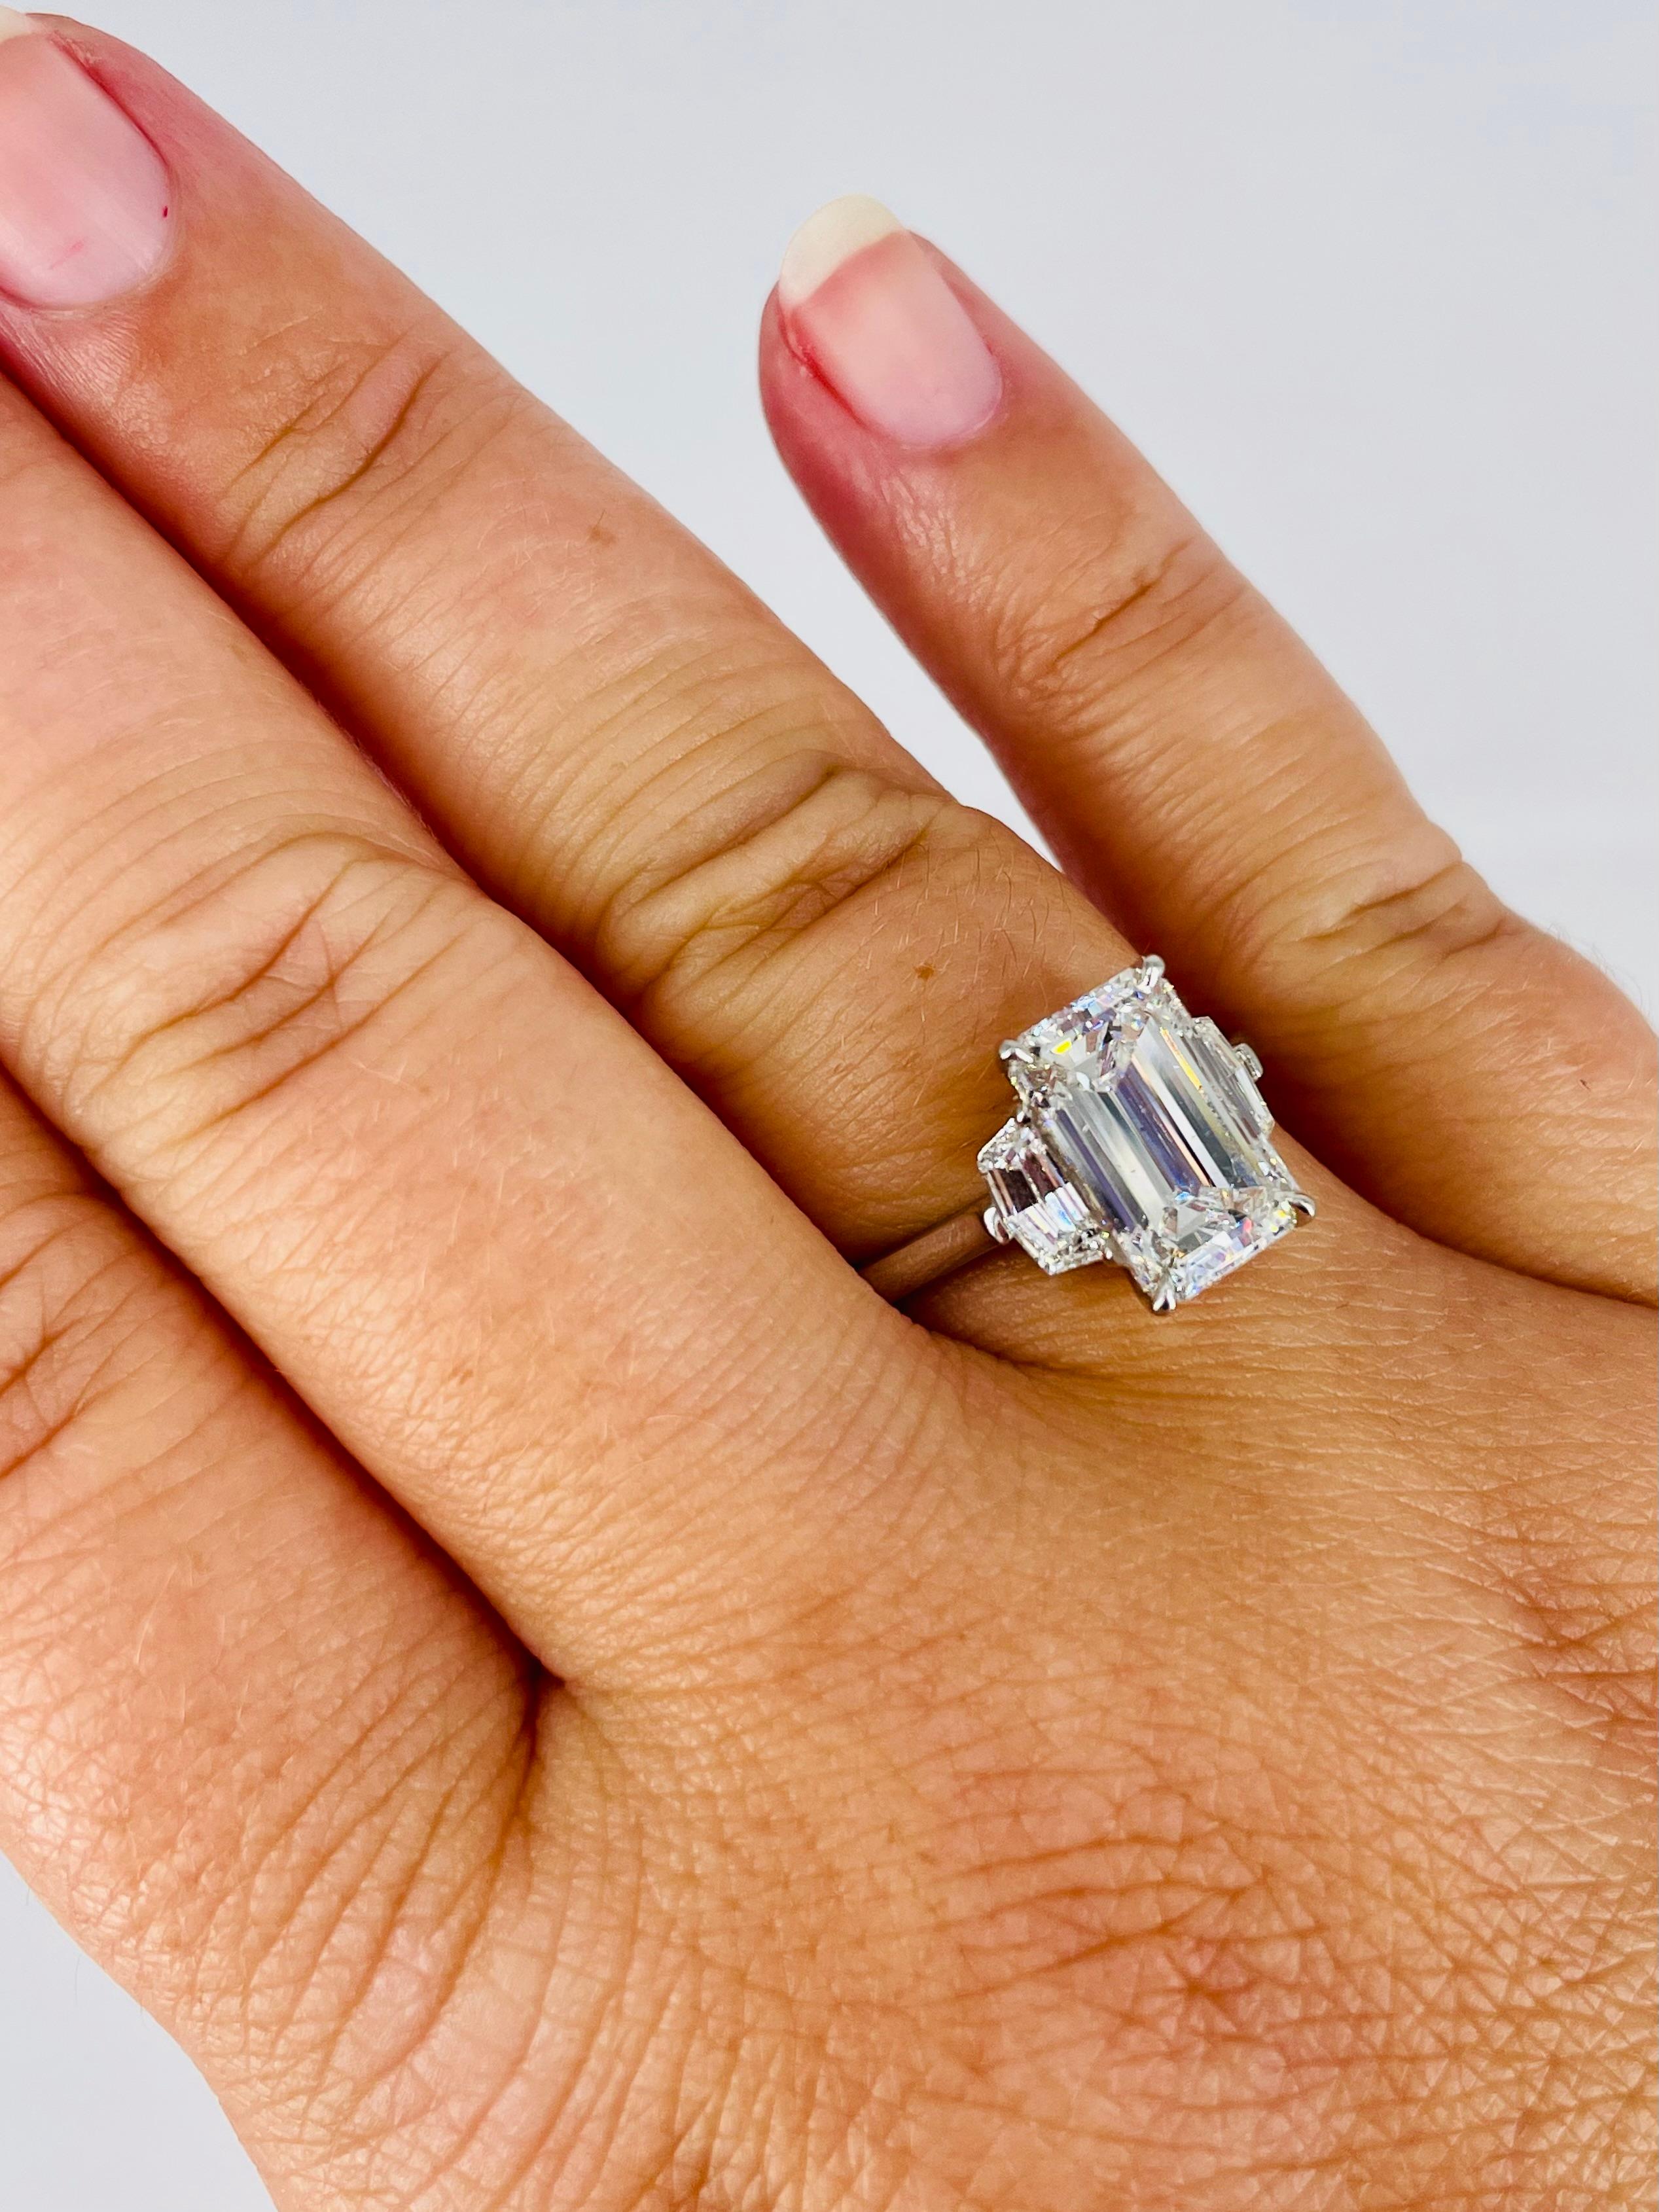 J. Birnbach 3.01 carat Emerald Cut Diamond Three Stone Engagement Ring For Sale 1